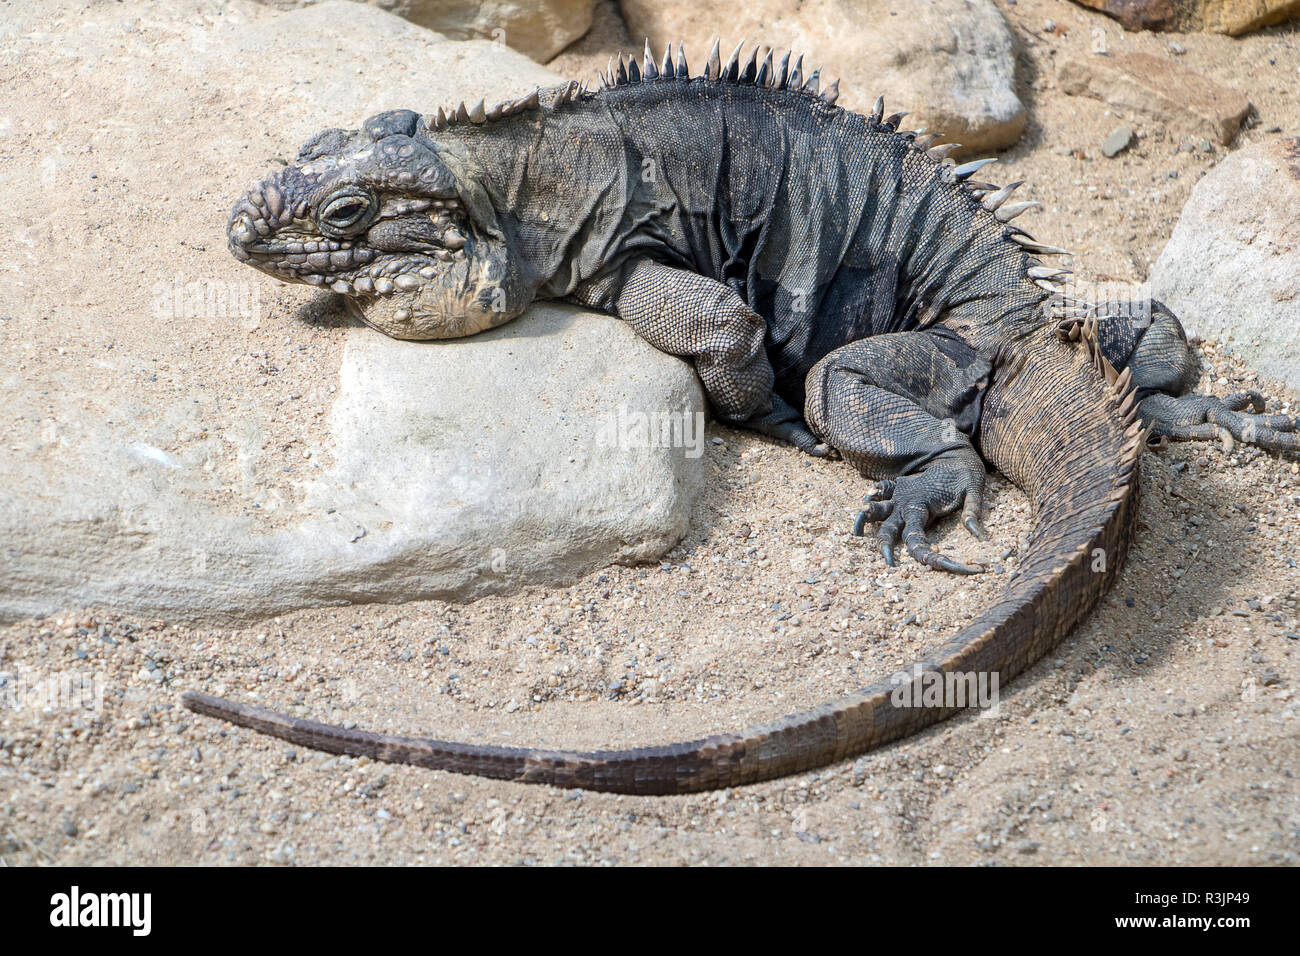 Suelo cubano - iguana Cyclura nubila tumbado sobre la roca. Foto de stock